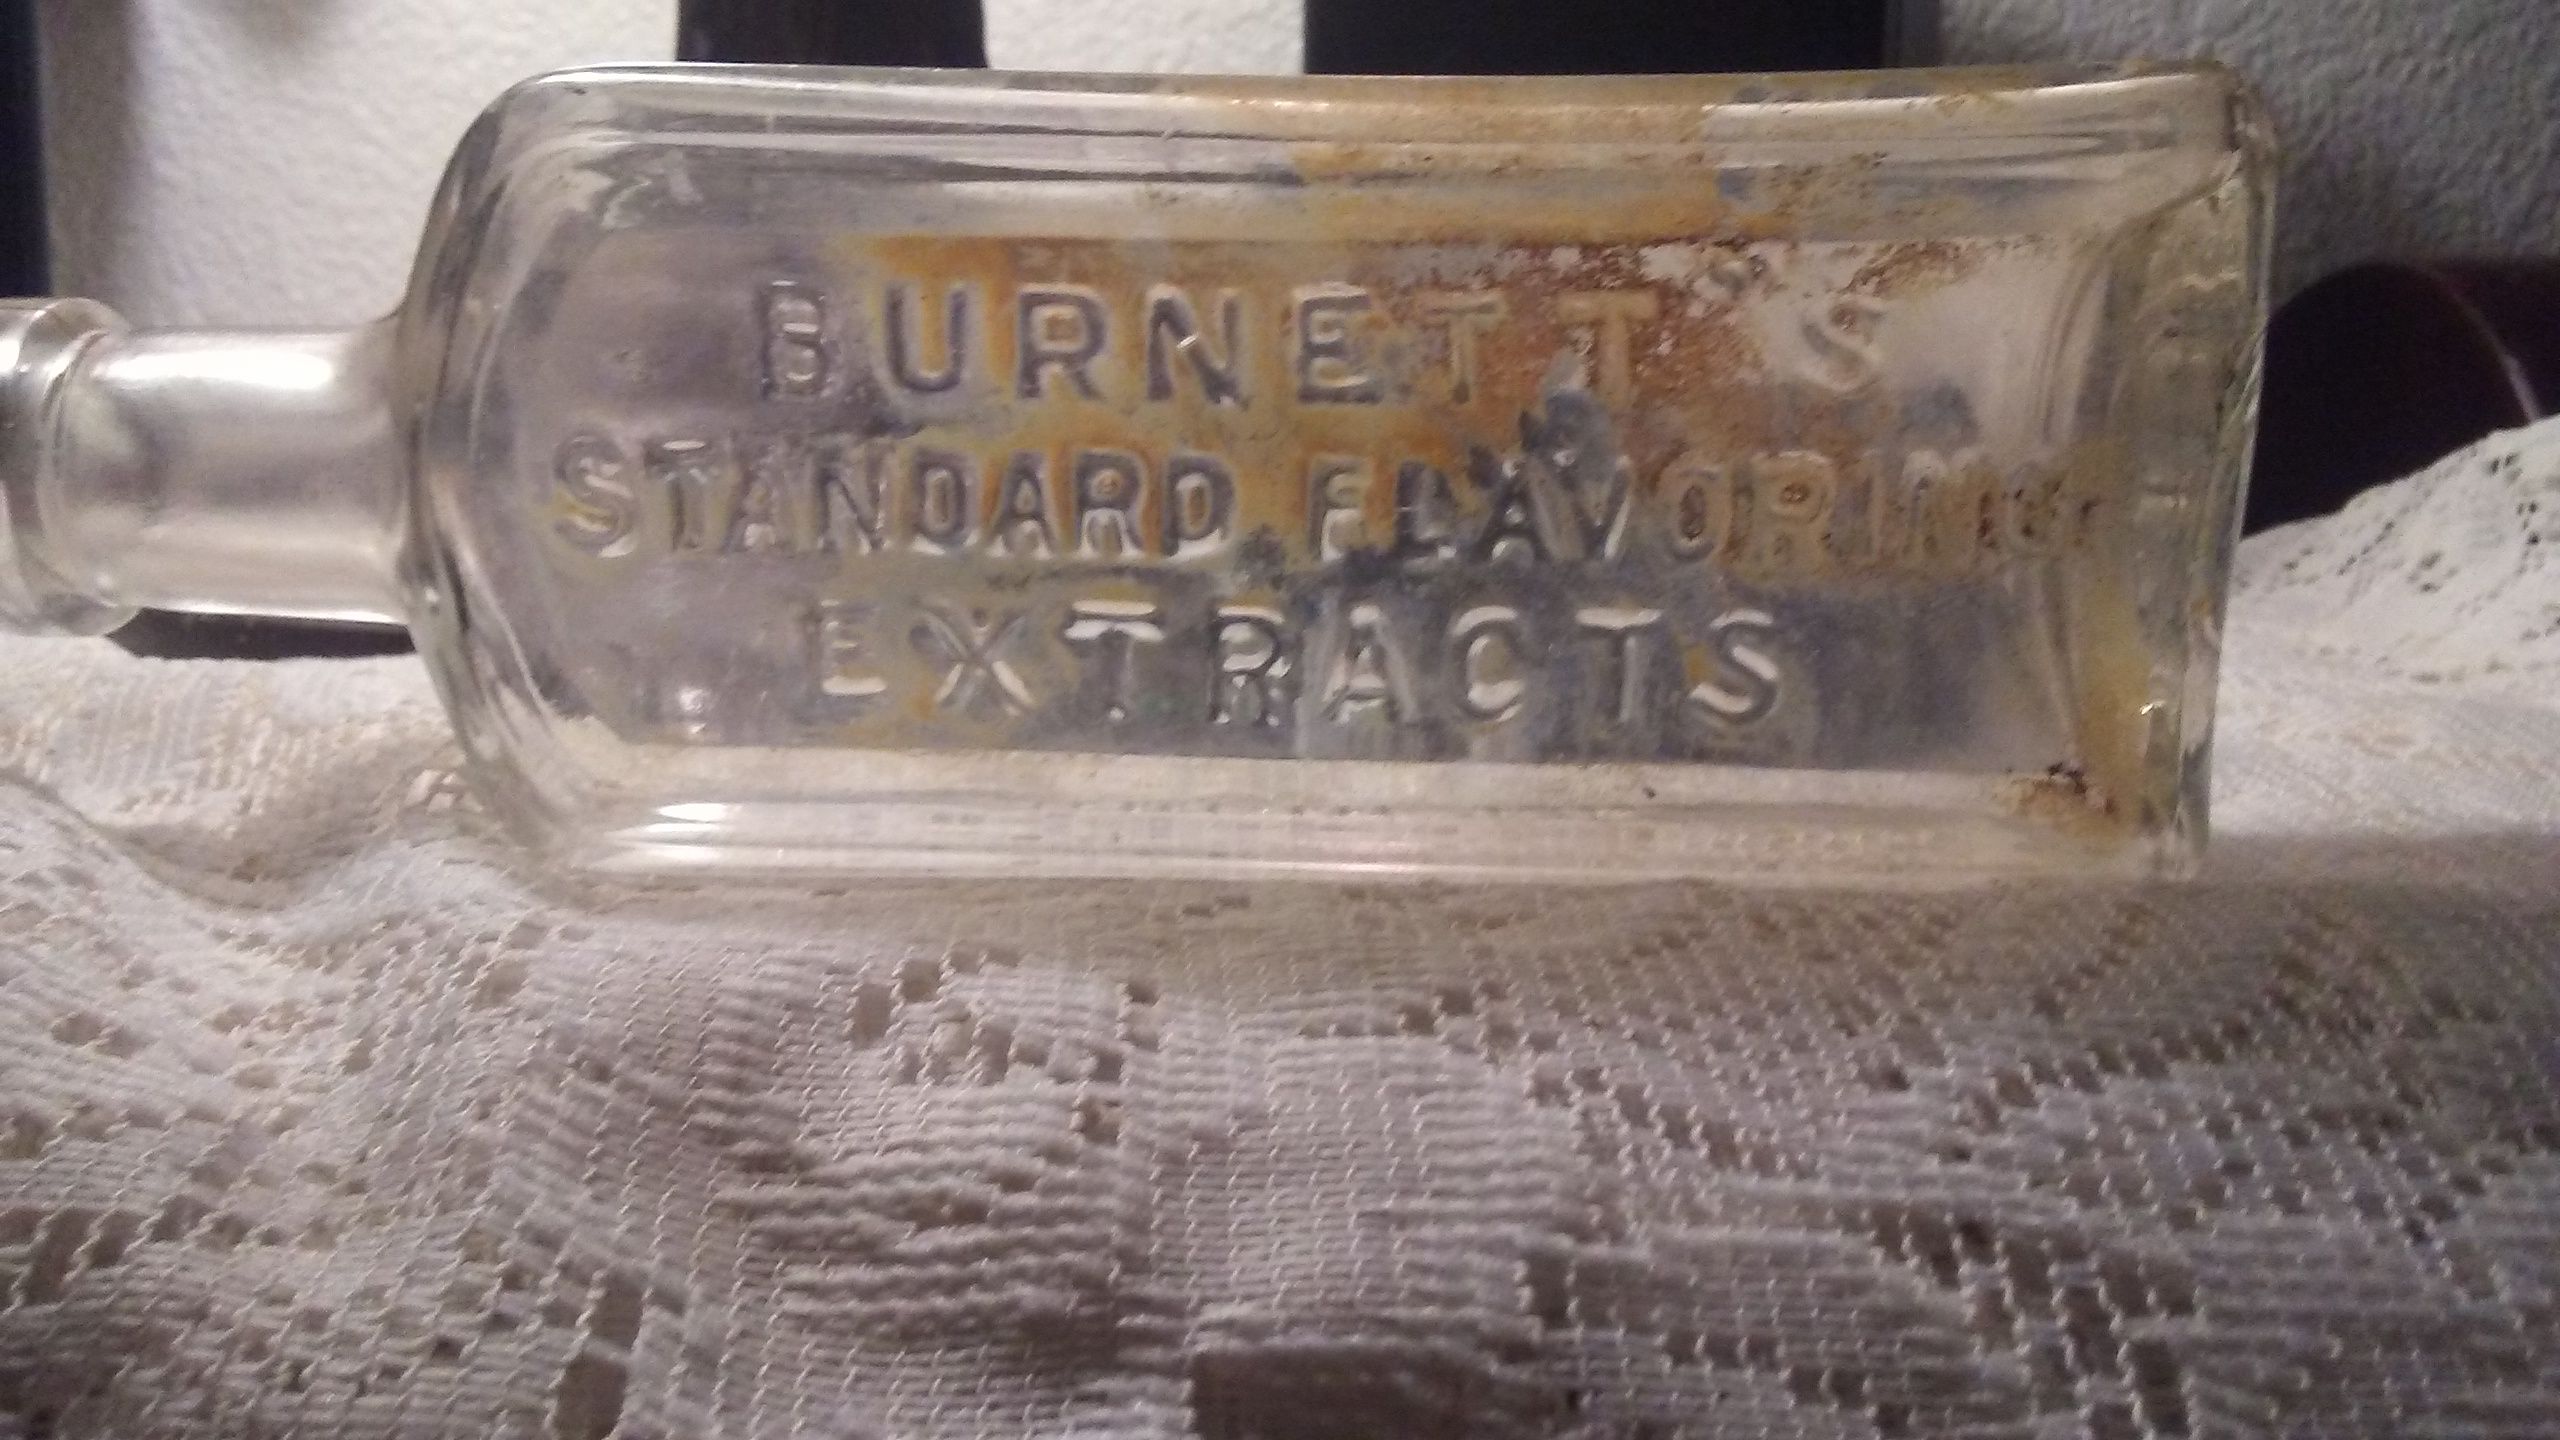 Antique Burnetts Standard Flavoring Bottle 1920's